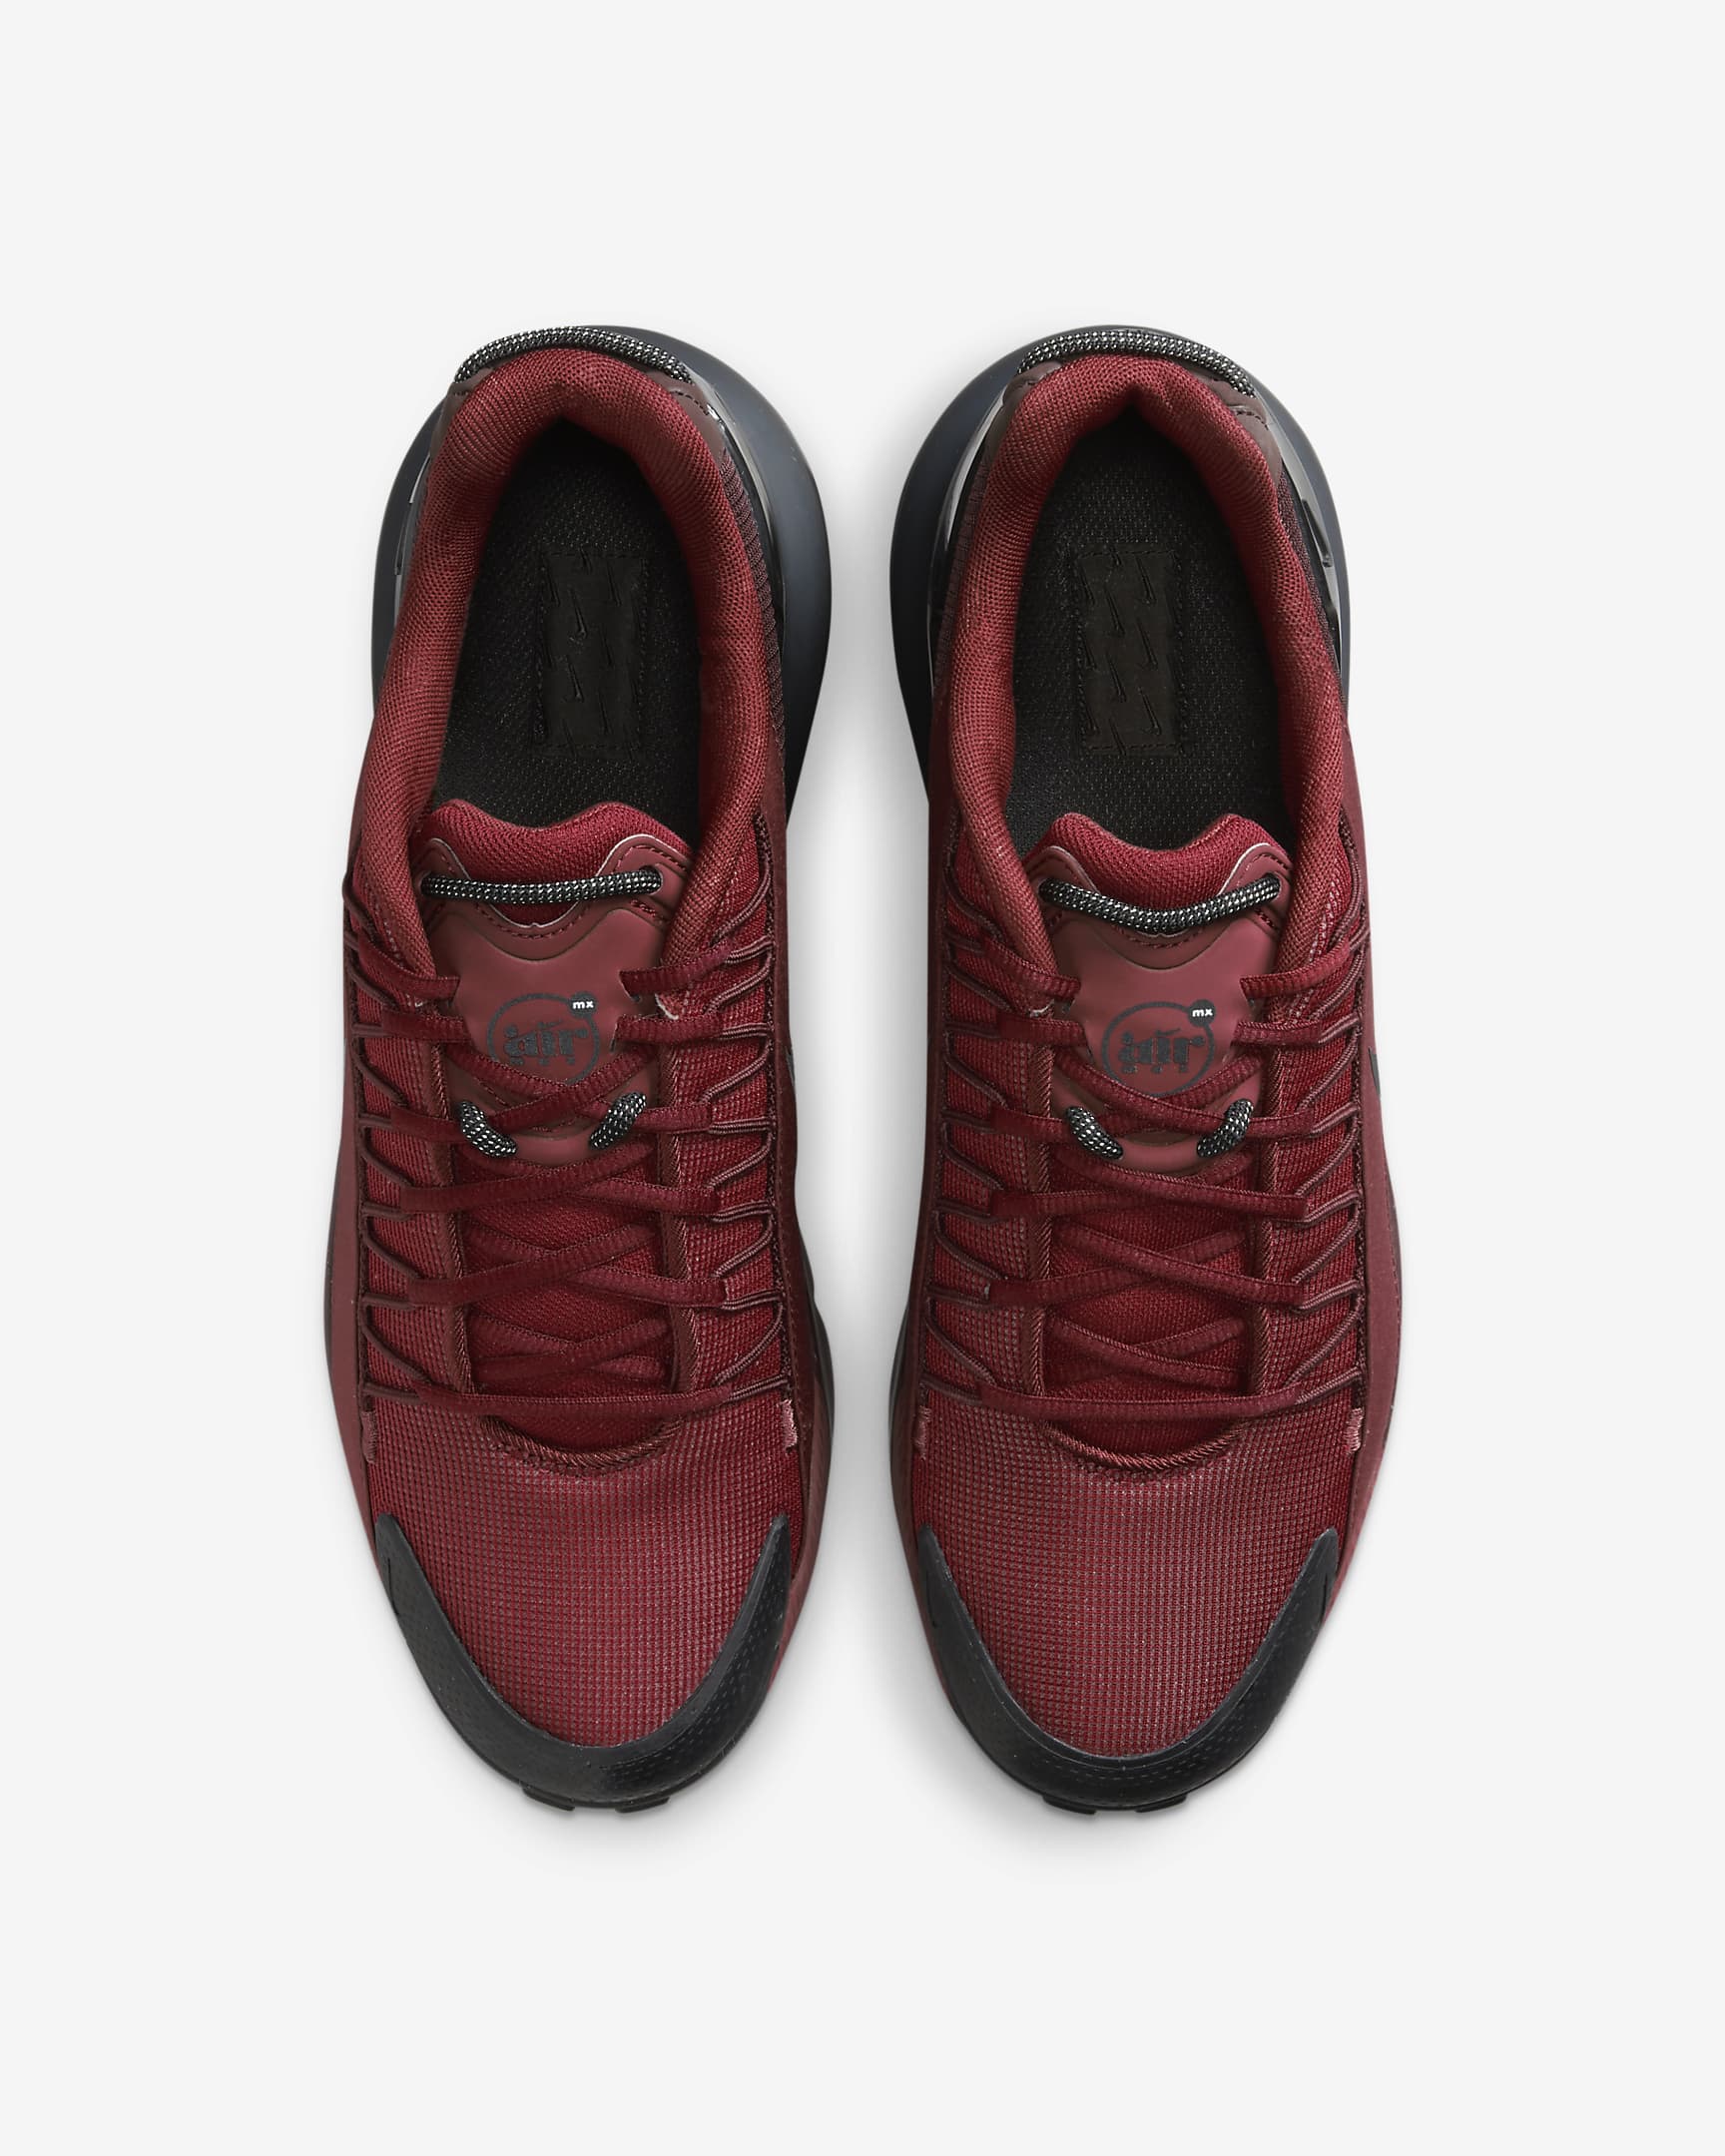 Nike Air Max Pulse Roam Mens Dragon Red Shoes Review